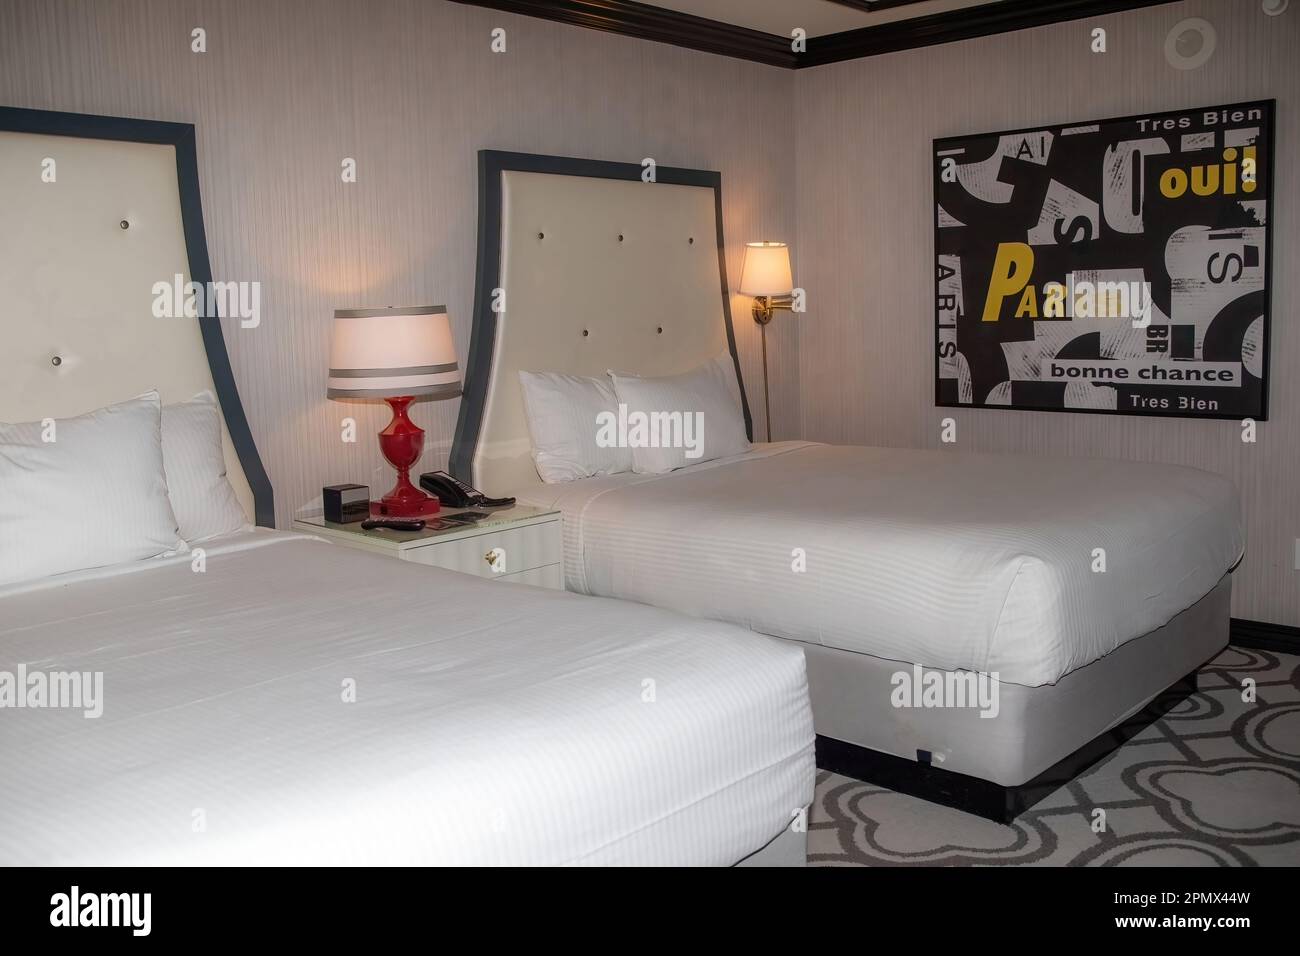 Inside paris hotel las vegas hi-res stock photography and images - Alamy